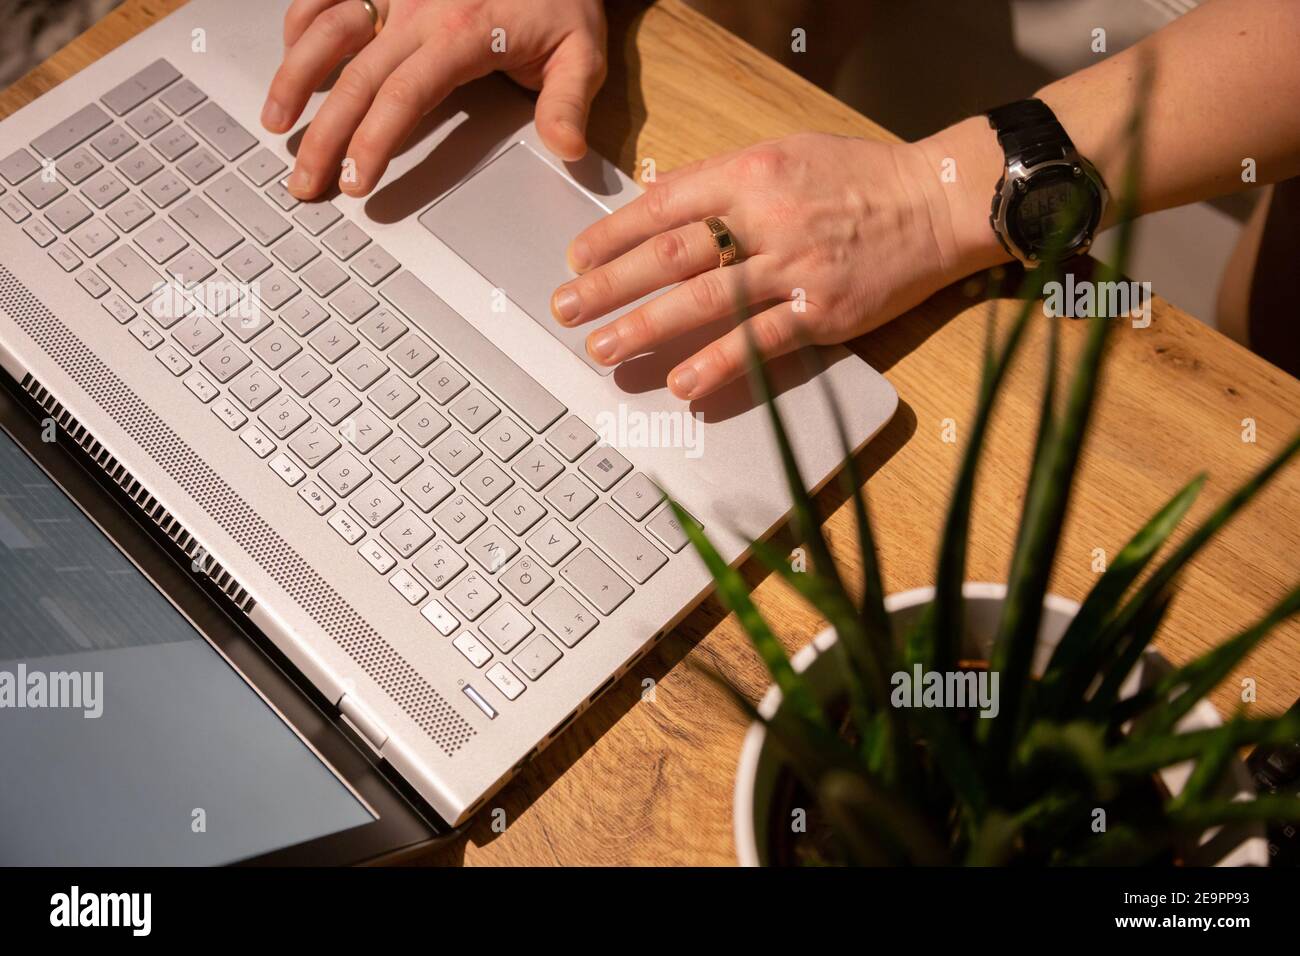 Un hombre en casa trabaja en una computadora, trabaja desde casa, ambiente en casa con una computadora Foto de stock